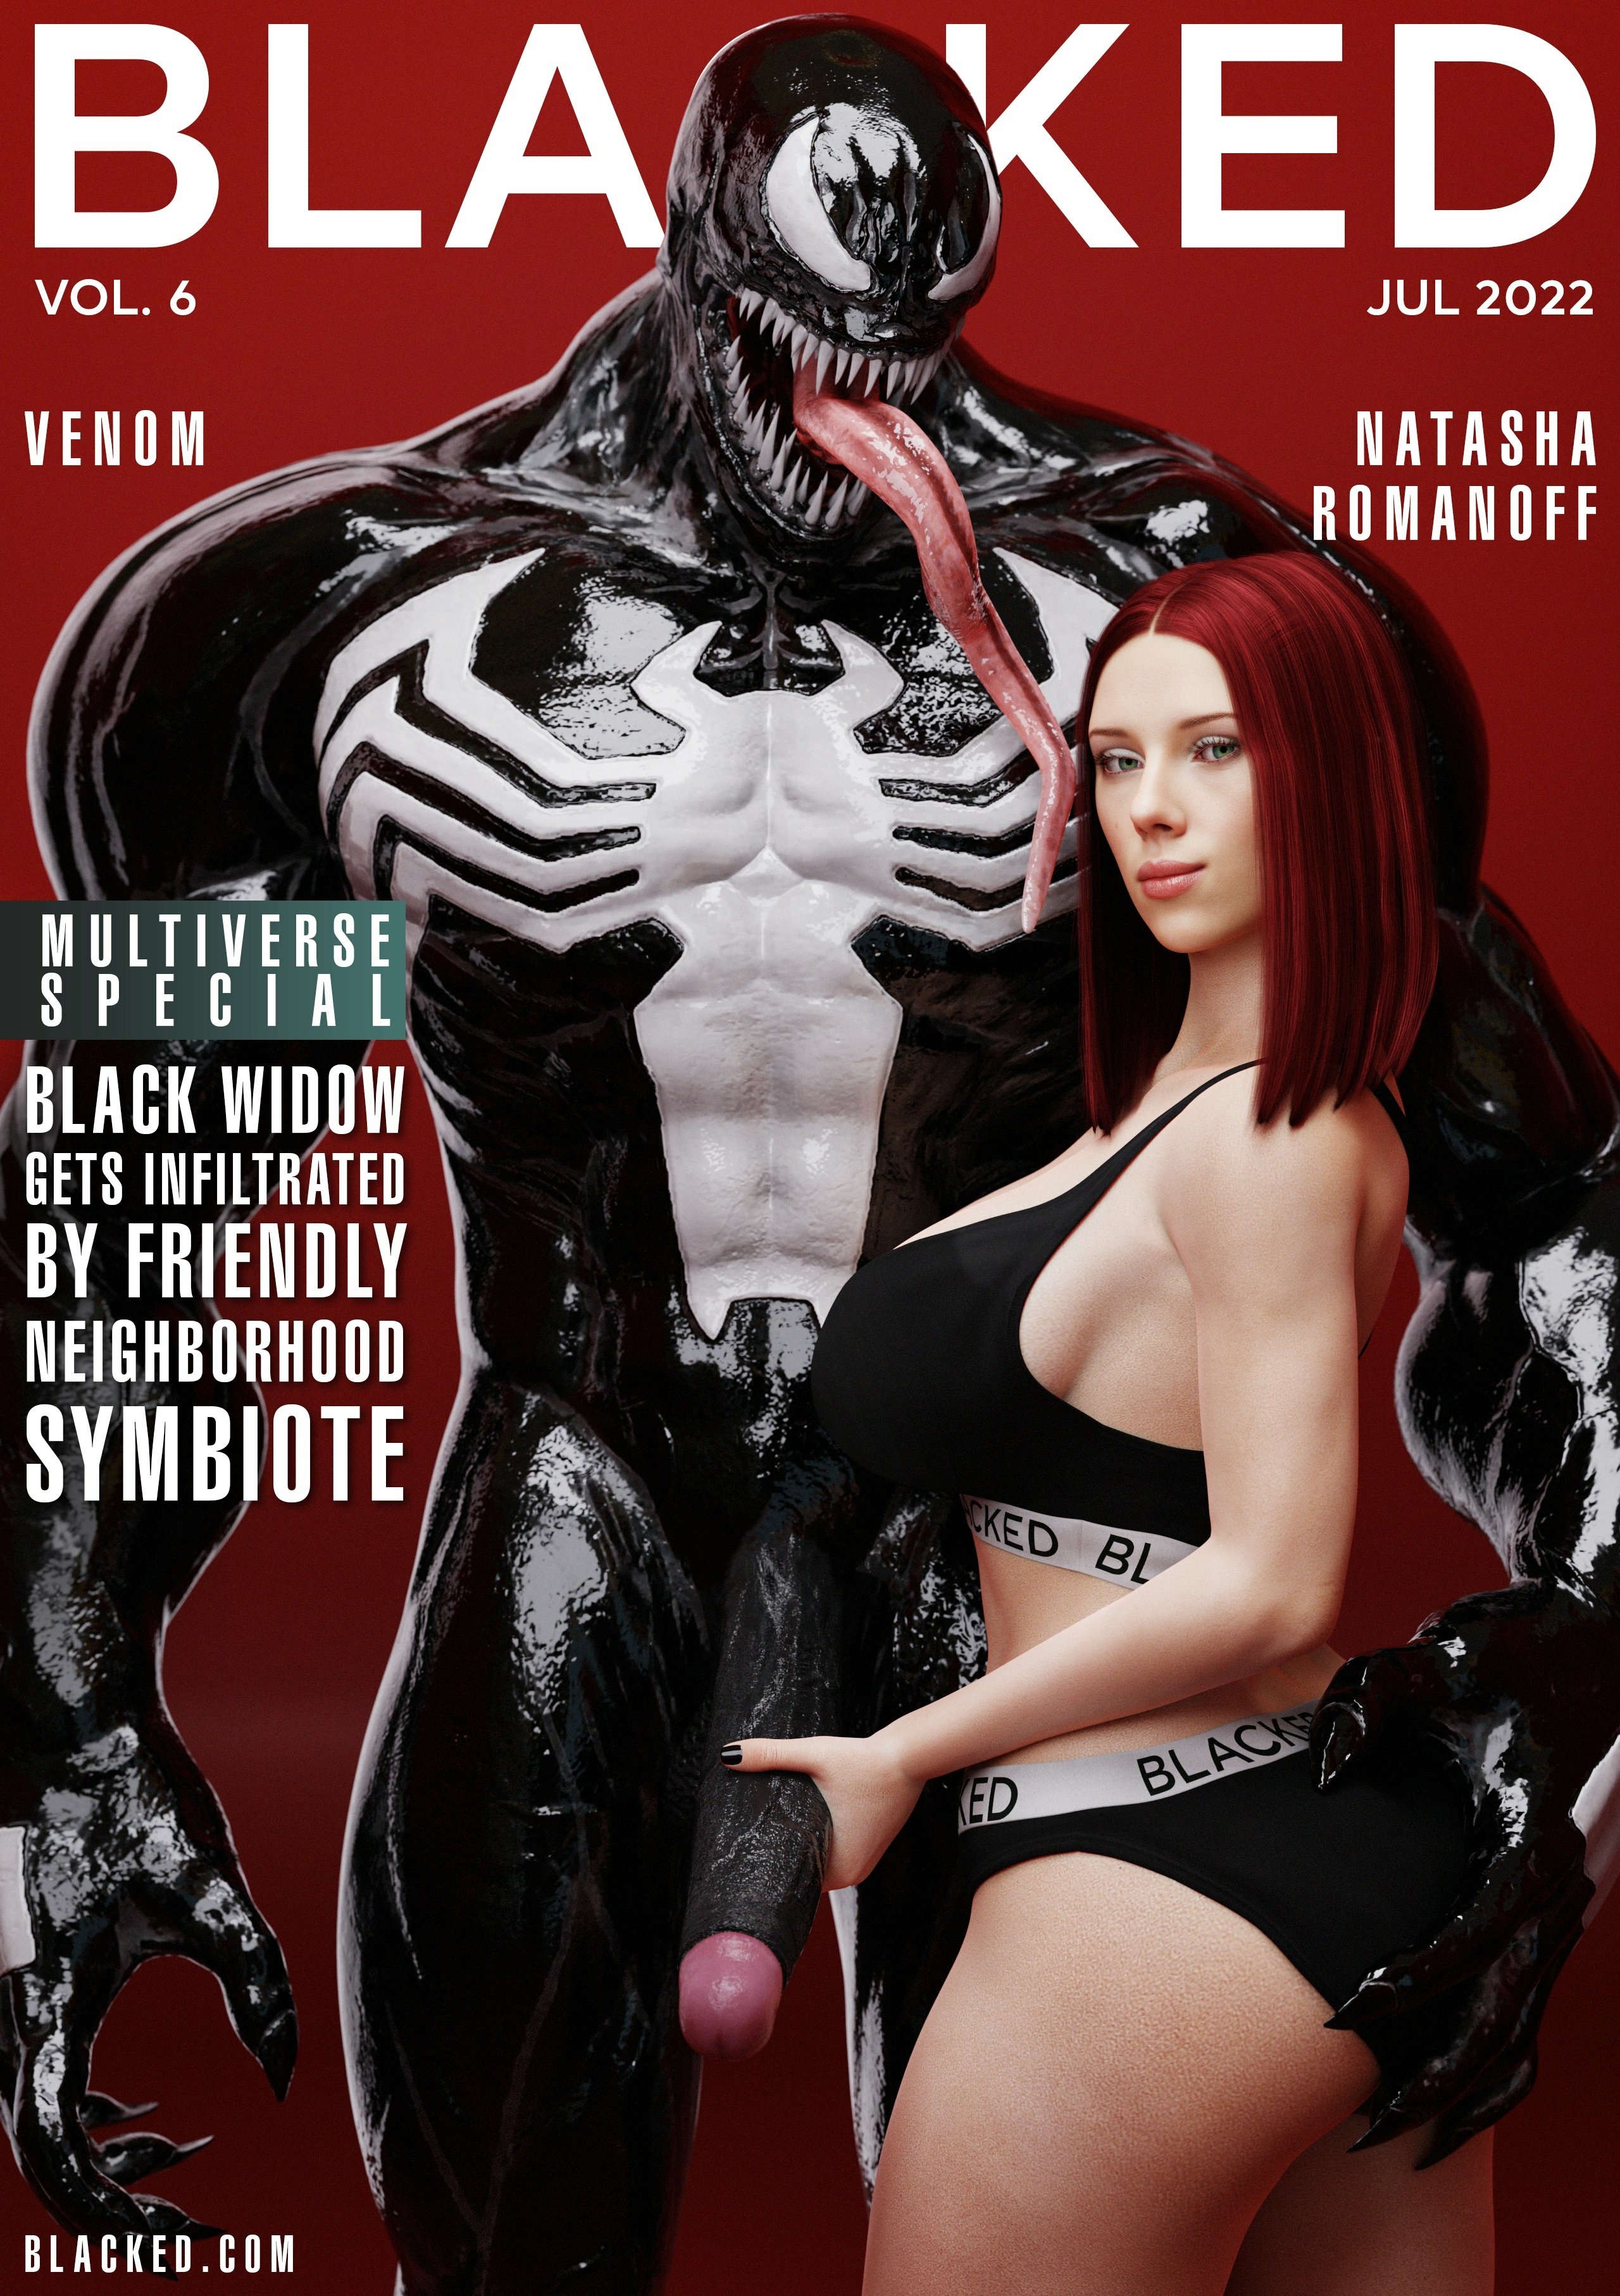 𝑩𝒍𝒂𝒄𝒌 𝑾𝒊𝒅𝒐𝒘 𝒙 𝑽𝒆𝒏𝒐𝒎 𝑩𝑳𝑨𝑪𝑲𝑬𝑫.𝒄𝒐𝒎 𝑷𝒉𝒐𝒕𝒐𝒔𝒉𝒐𝒐𝒕 Black Widow Marvel Venom Big Dick Anal Nipples Dick Licking Licking Cock Lingerie Sexy Lingerie Boobs Big boobs Tits Ass Big Ass Cake Sexy Horny Face Horny 3d Porn